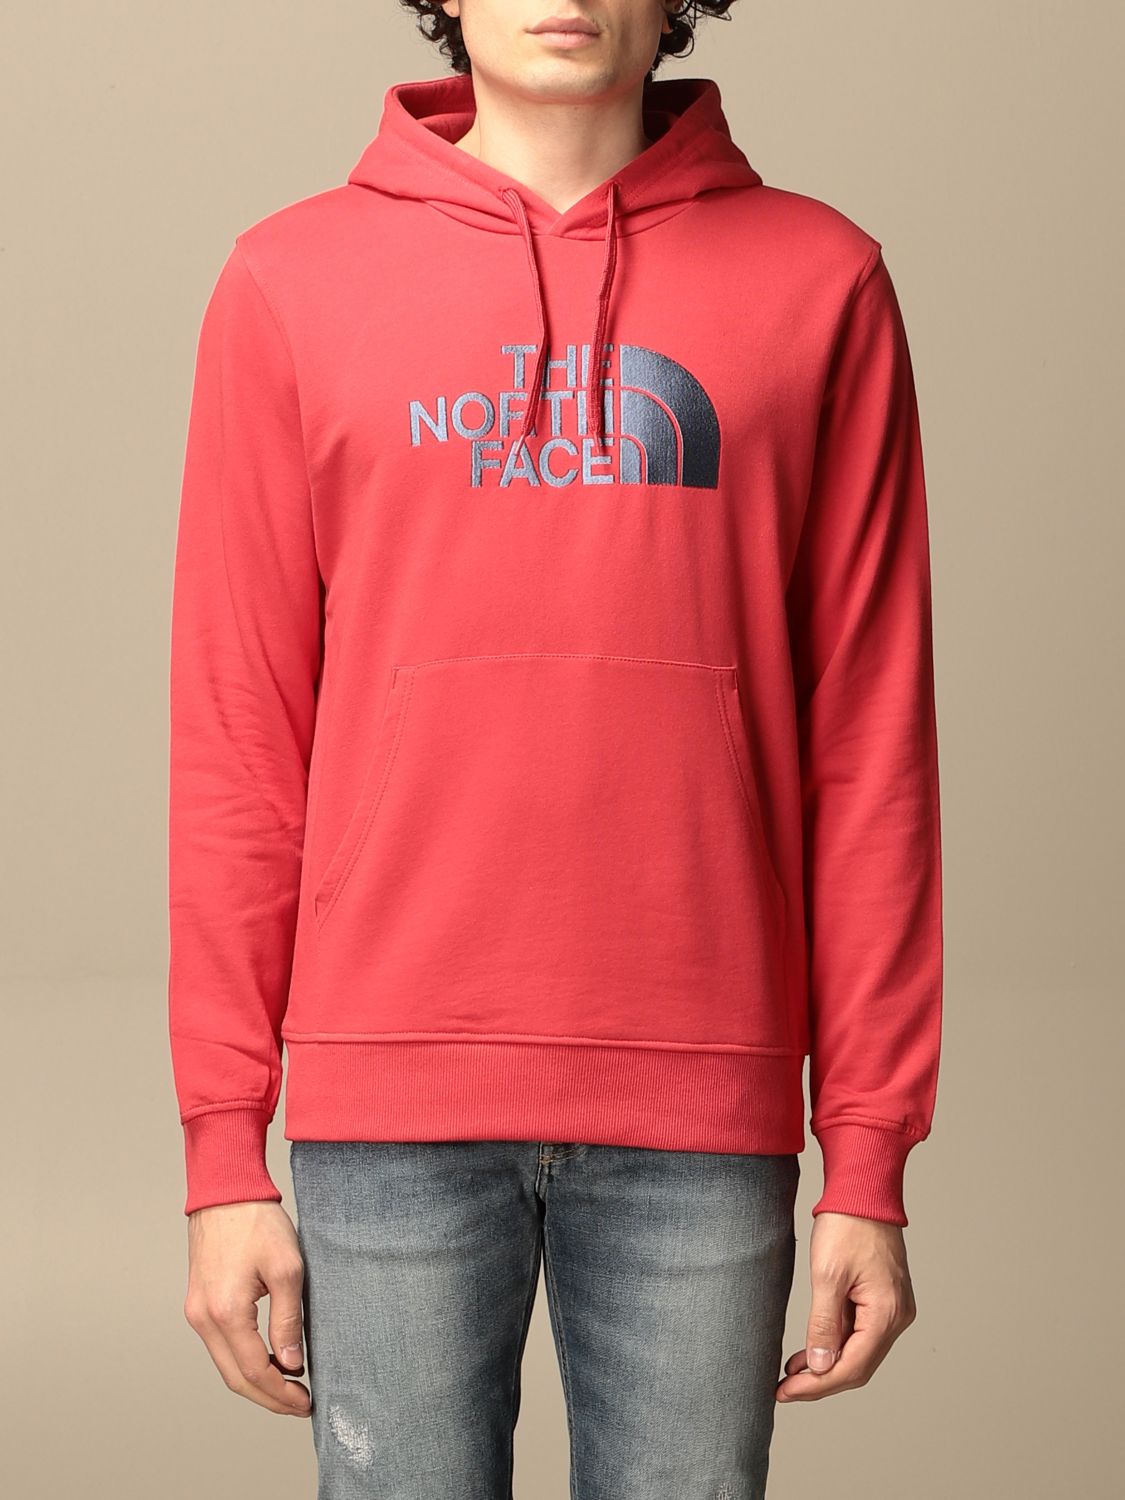 Sweatshirt The North Face: Sweatshirt men The North Face red 1